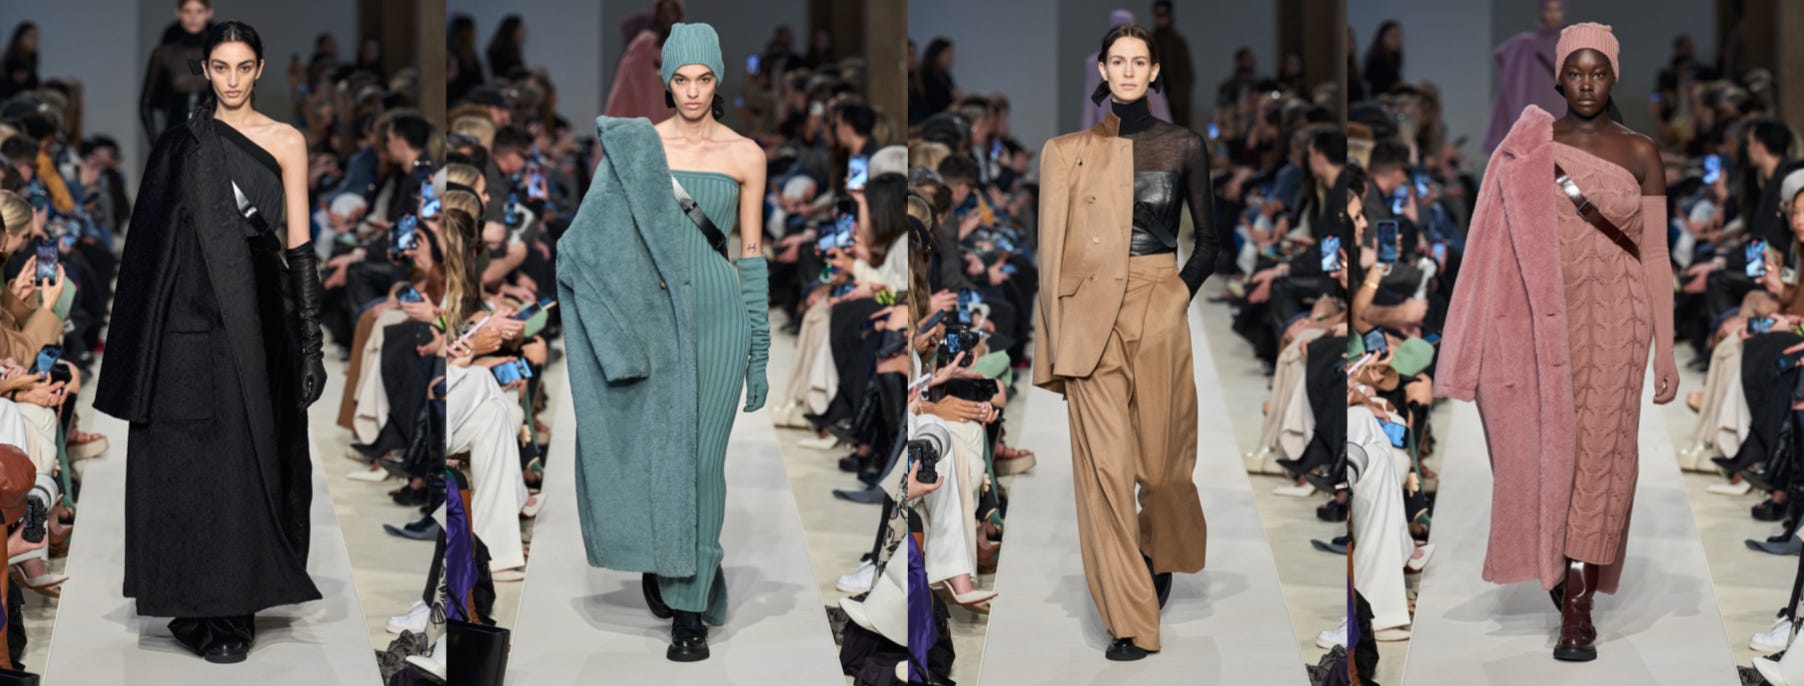 Fall-Winter 2019/2020 Fashion Weeks in Milan and Paris - LVMH